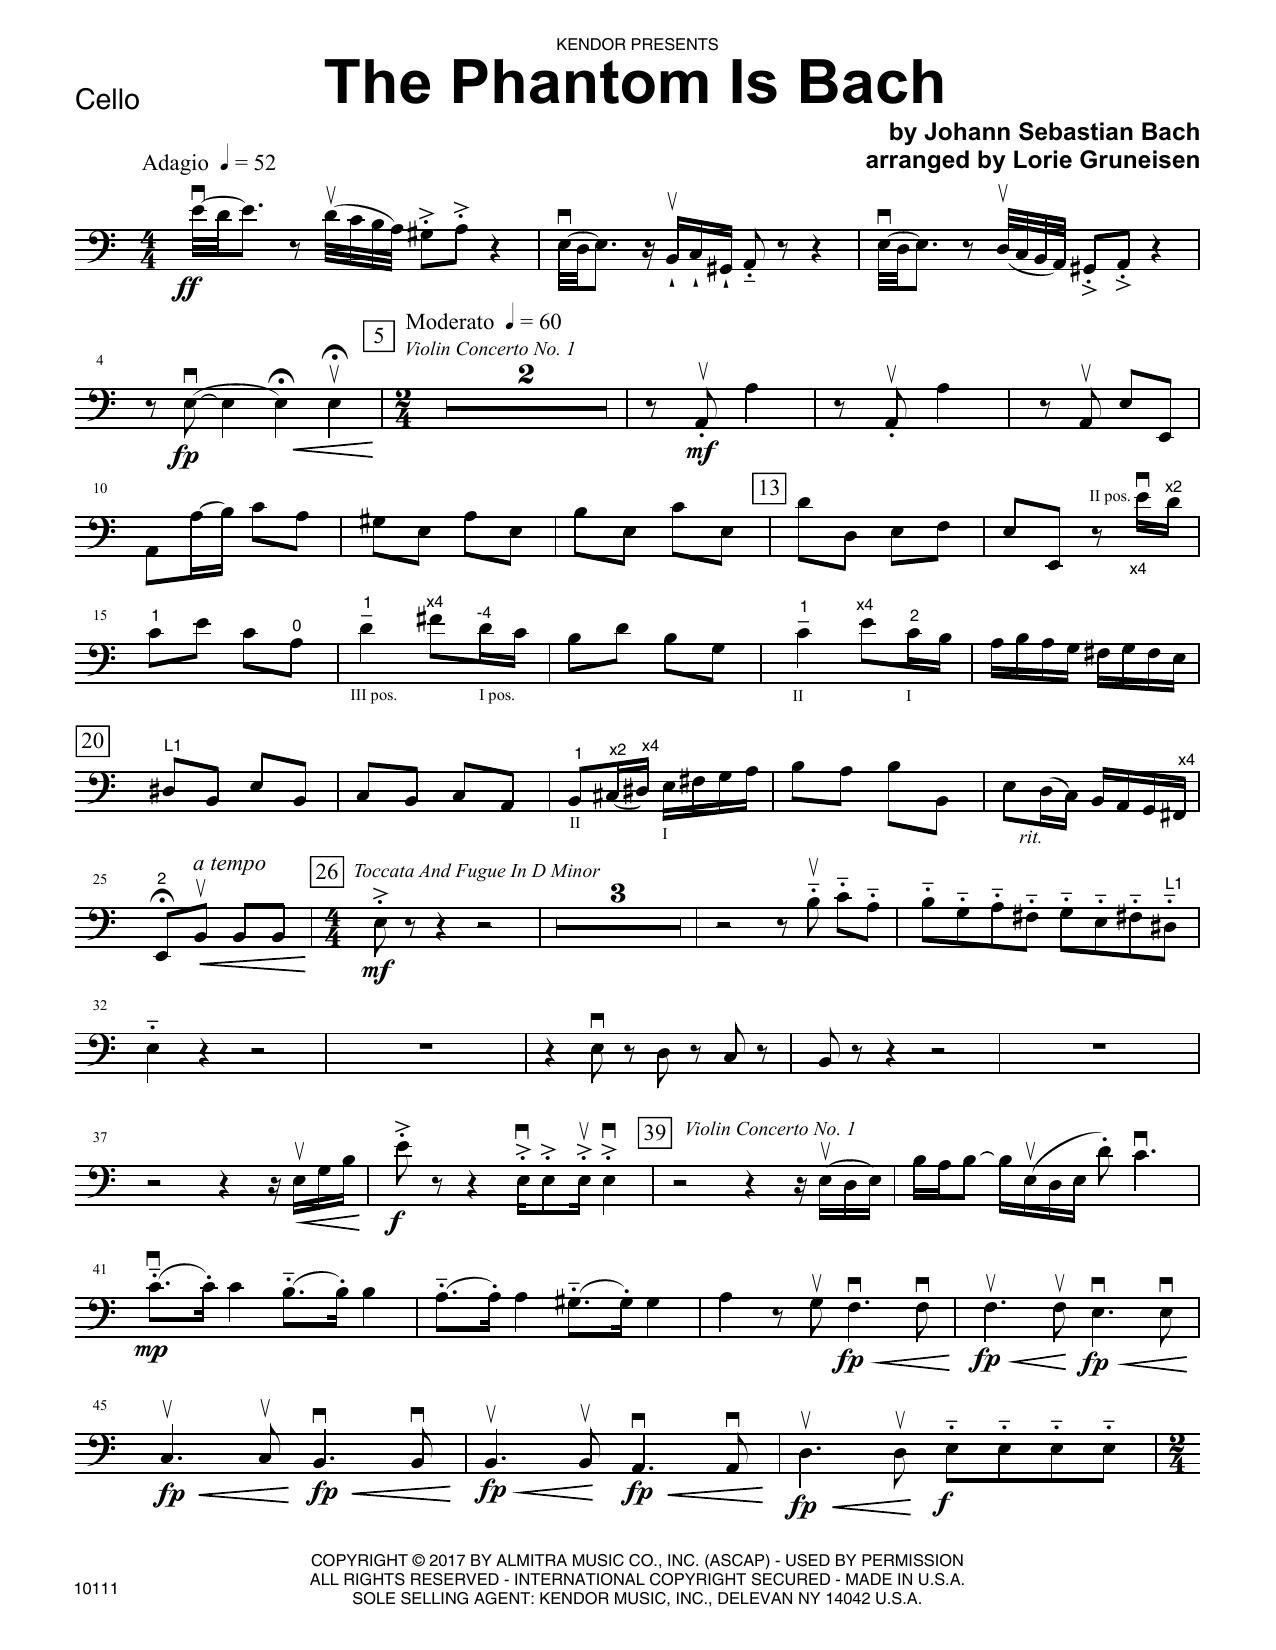 Download Lorie Gruneisen The Phantom Is Bach - Cello Sheet Music